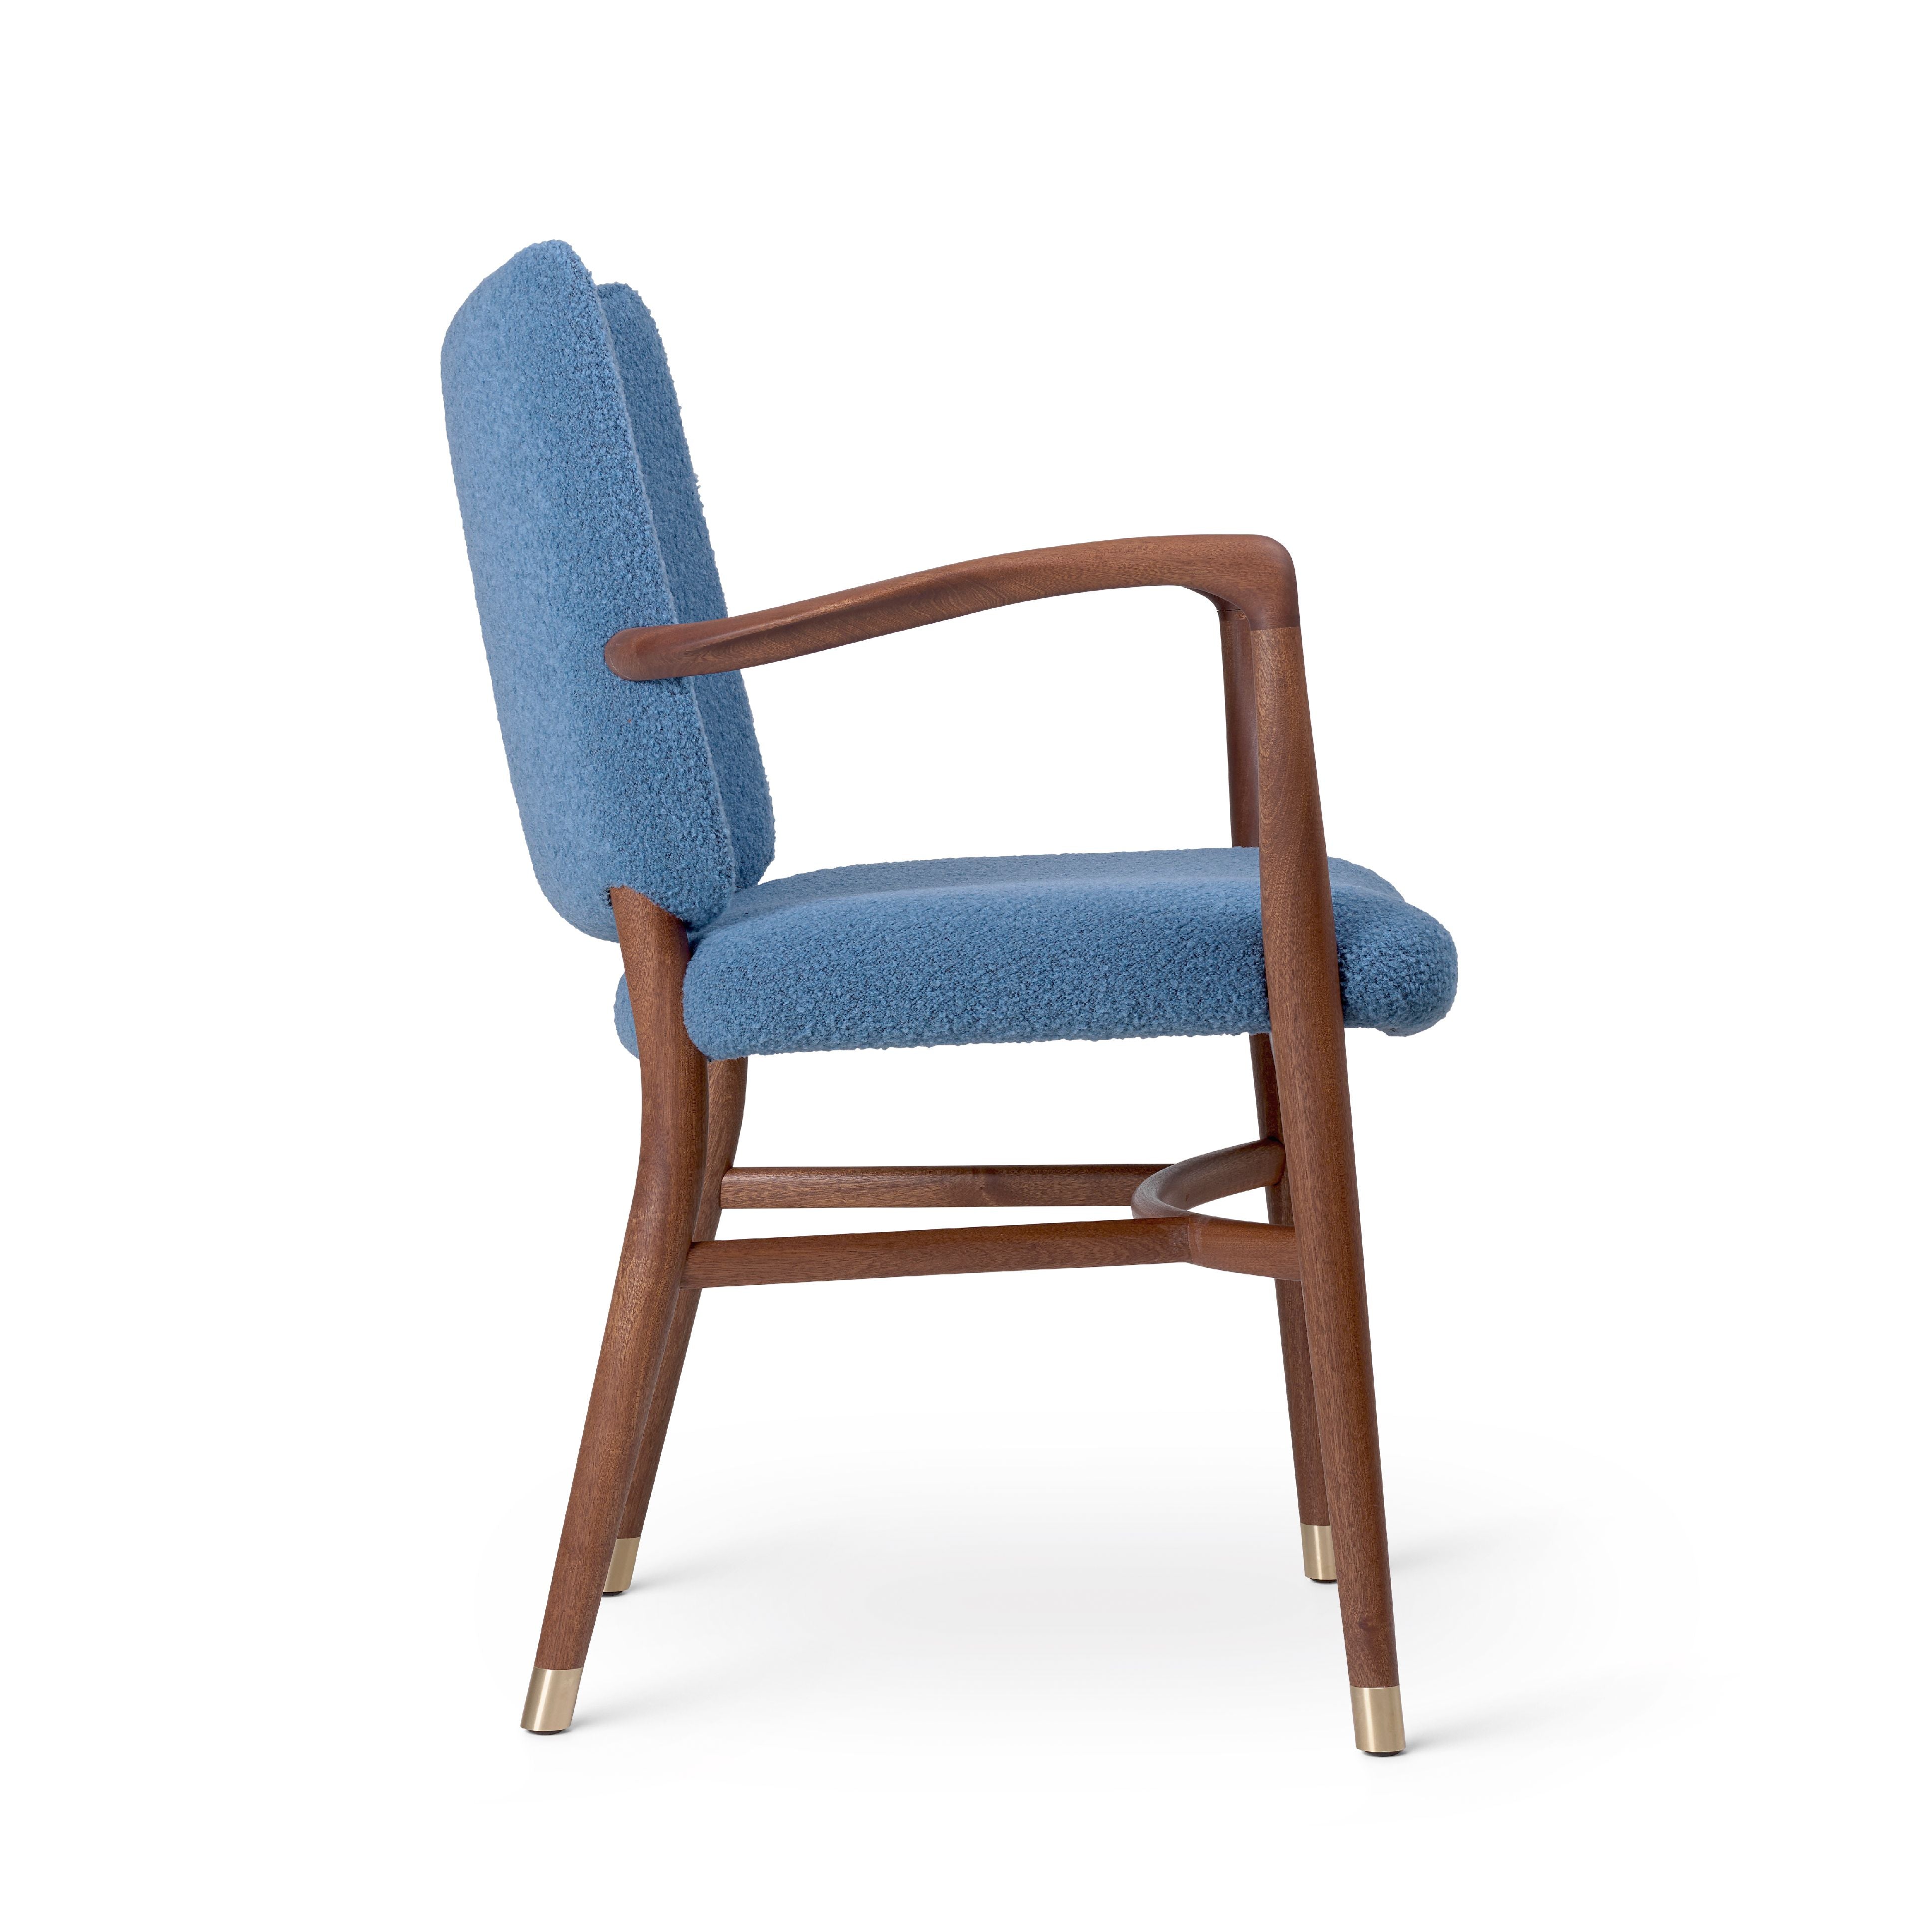 Carl Hansen VLA61 Monar CH fauteuil, huile en acajou / Baru 0740 textile